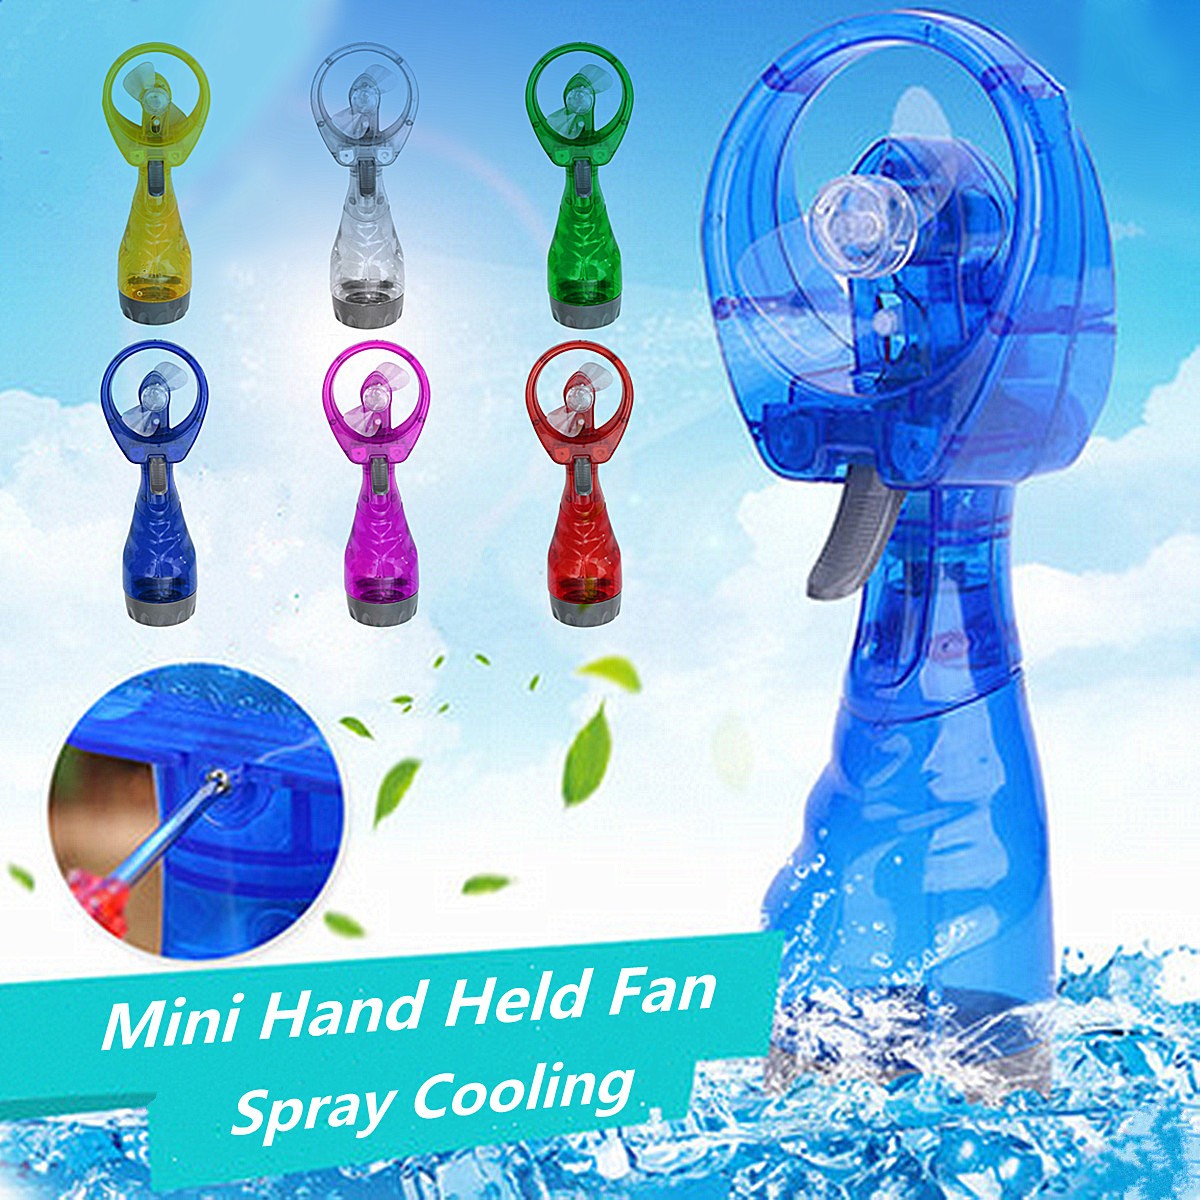 Portable-Mini-Hand-Held-Spray-Cooling-Fan-Water-Mist-Sport-Beach-Travel-Gadget-1319758-1